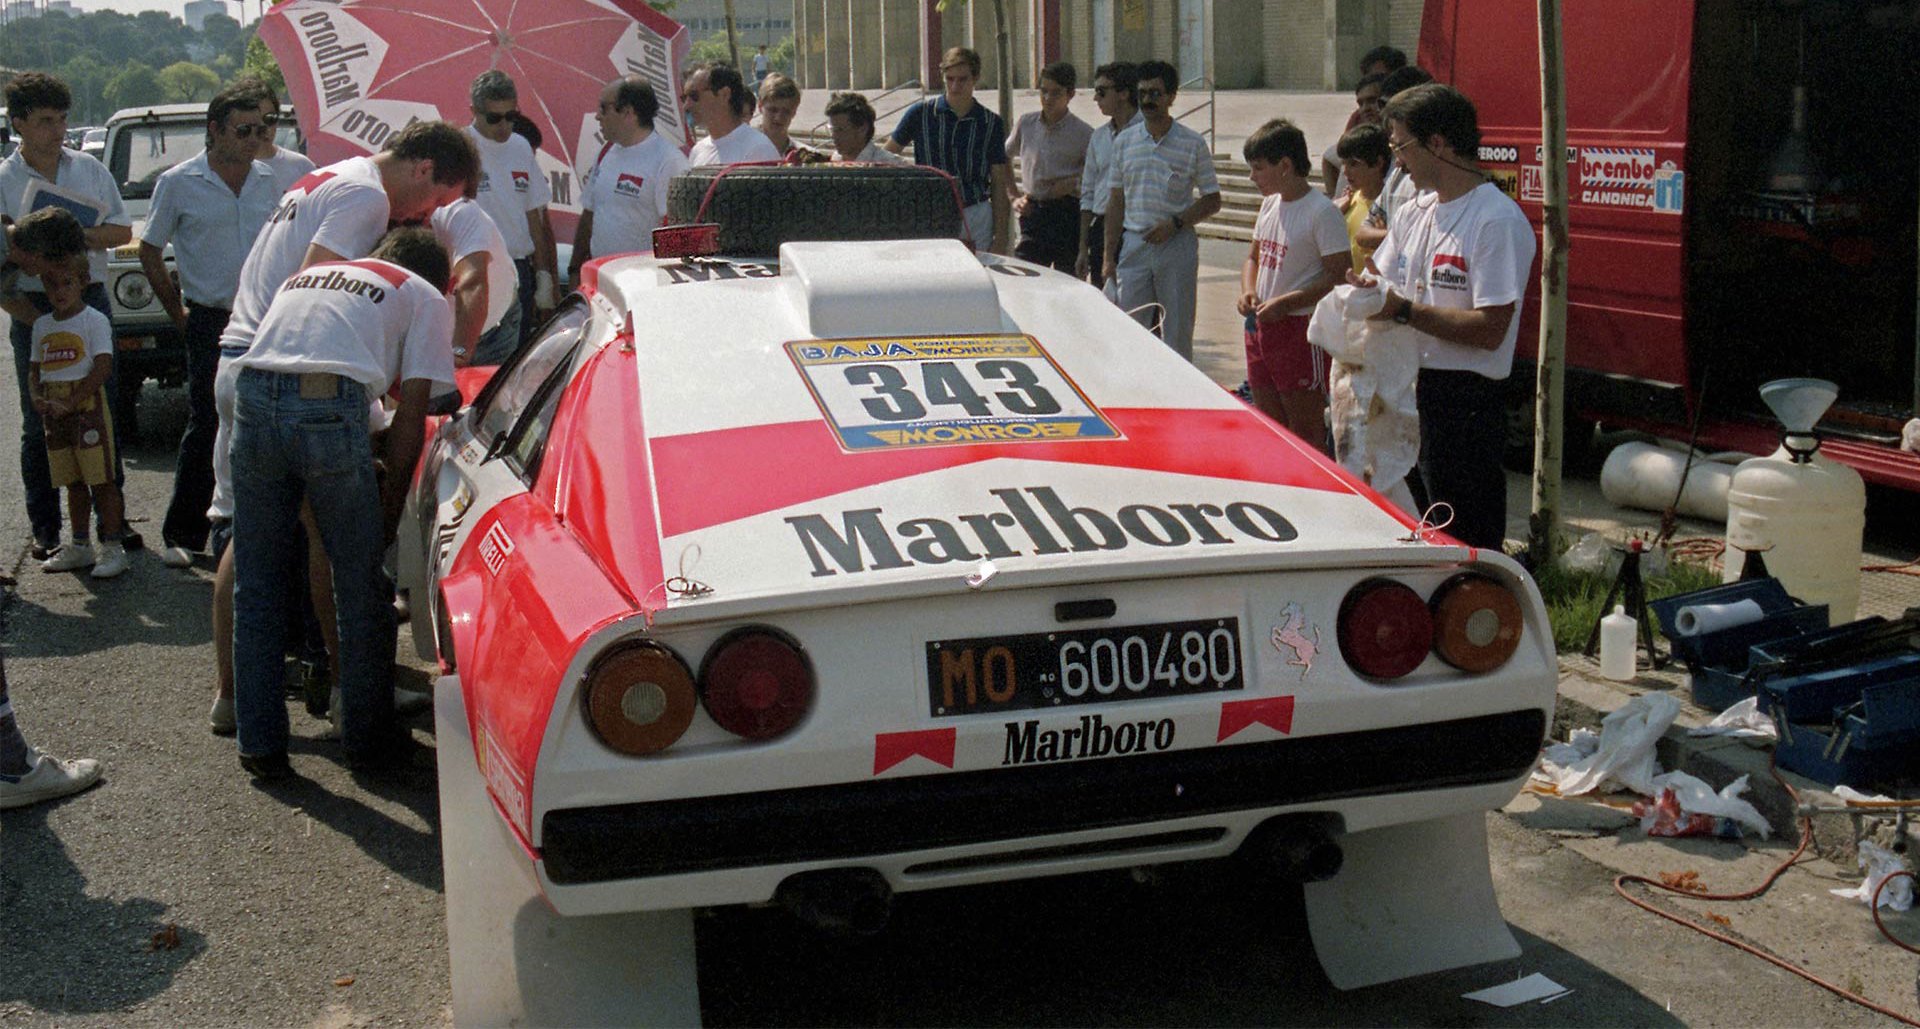 Marlboro Rally Cars’ Iconic Sponsored插图7